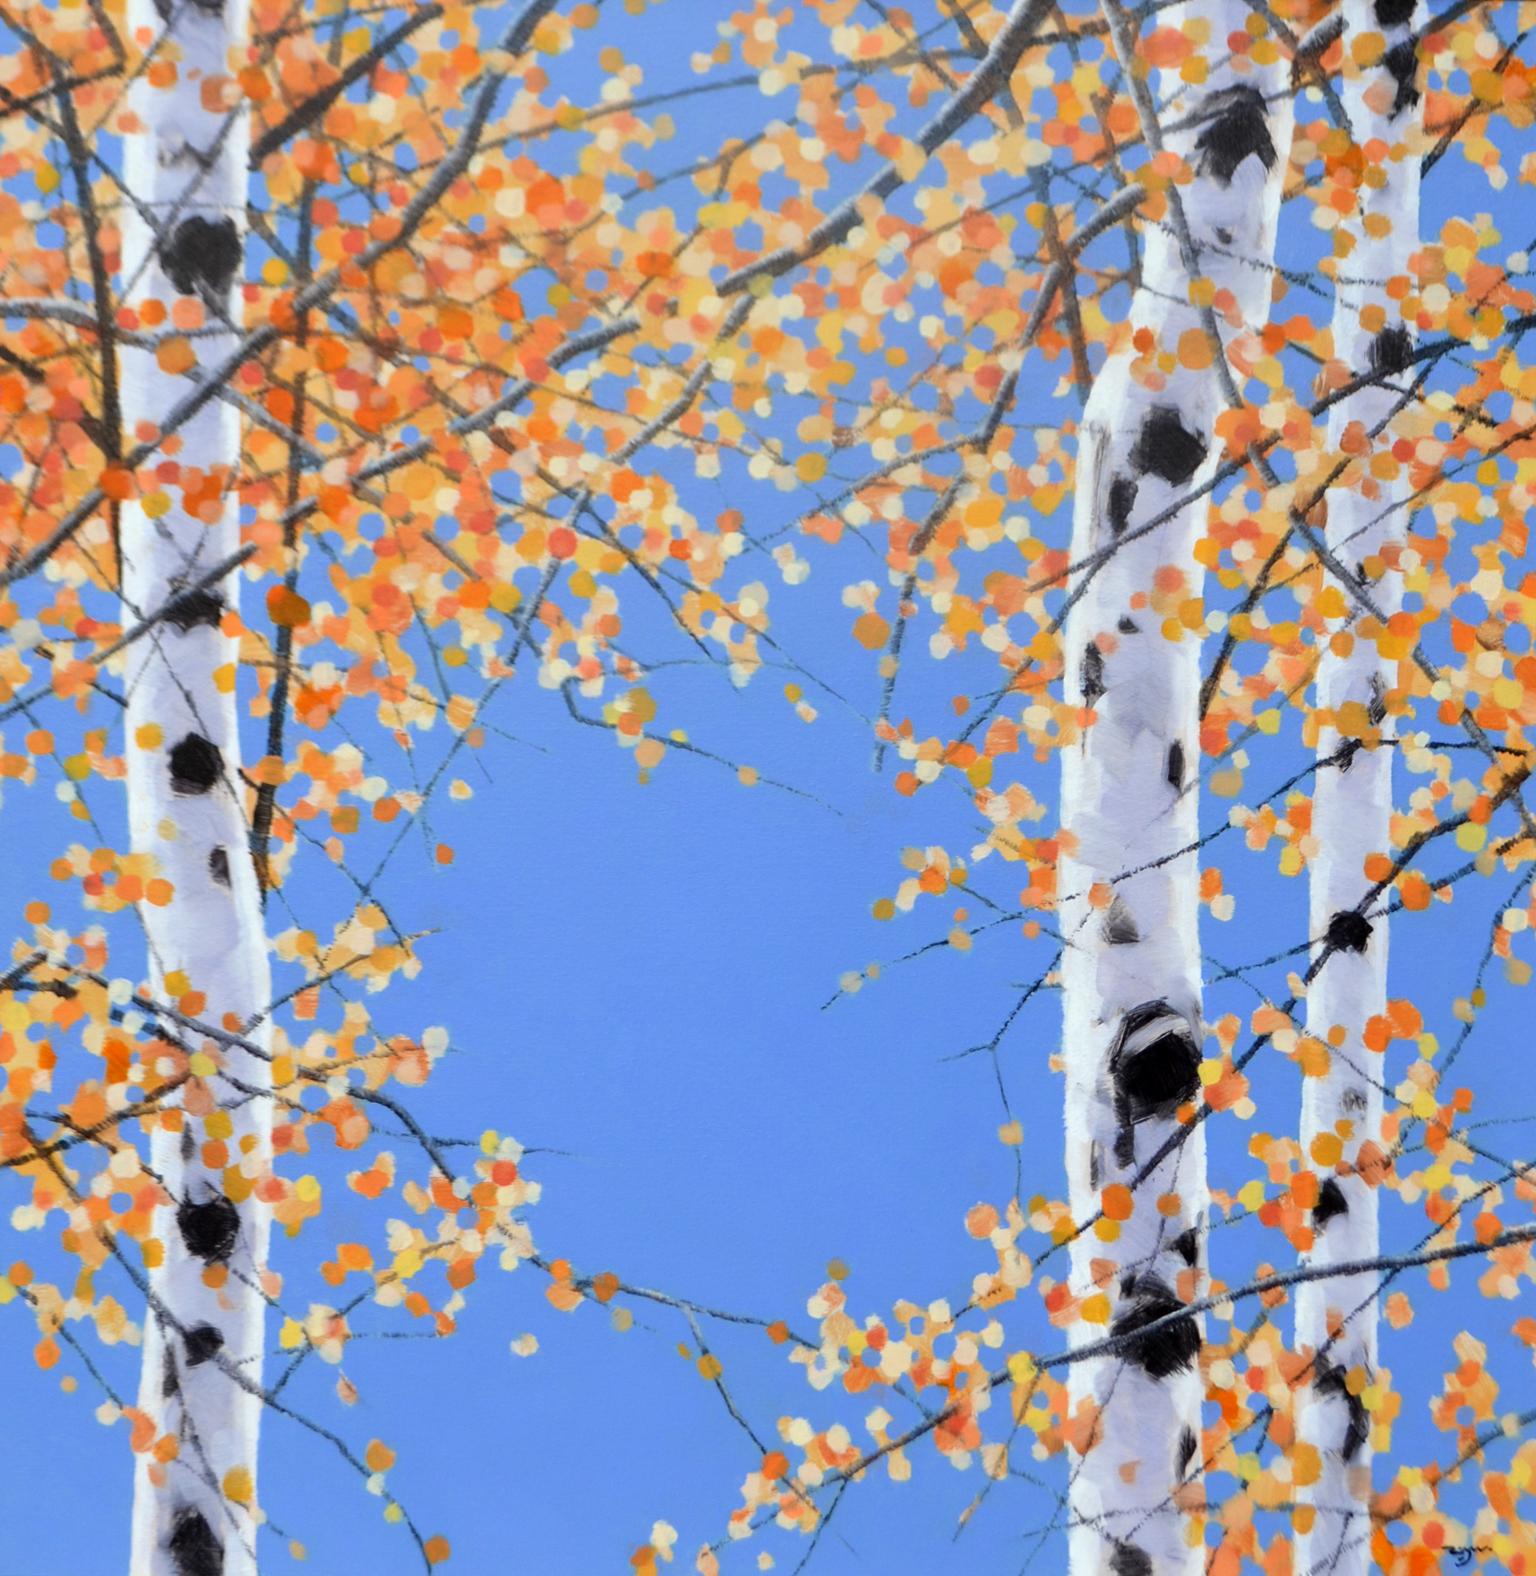 Zu Sheng Yu "Autumn", Fall White Birch Grove Oil Painting on Canvas, 2018